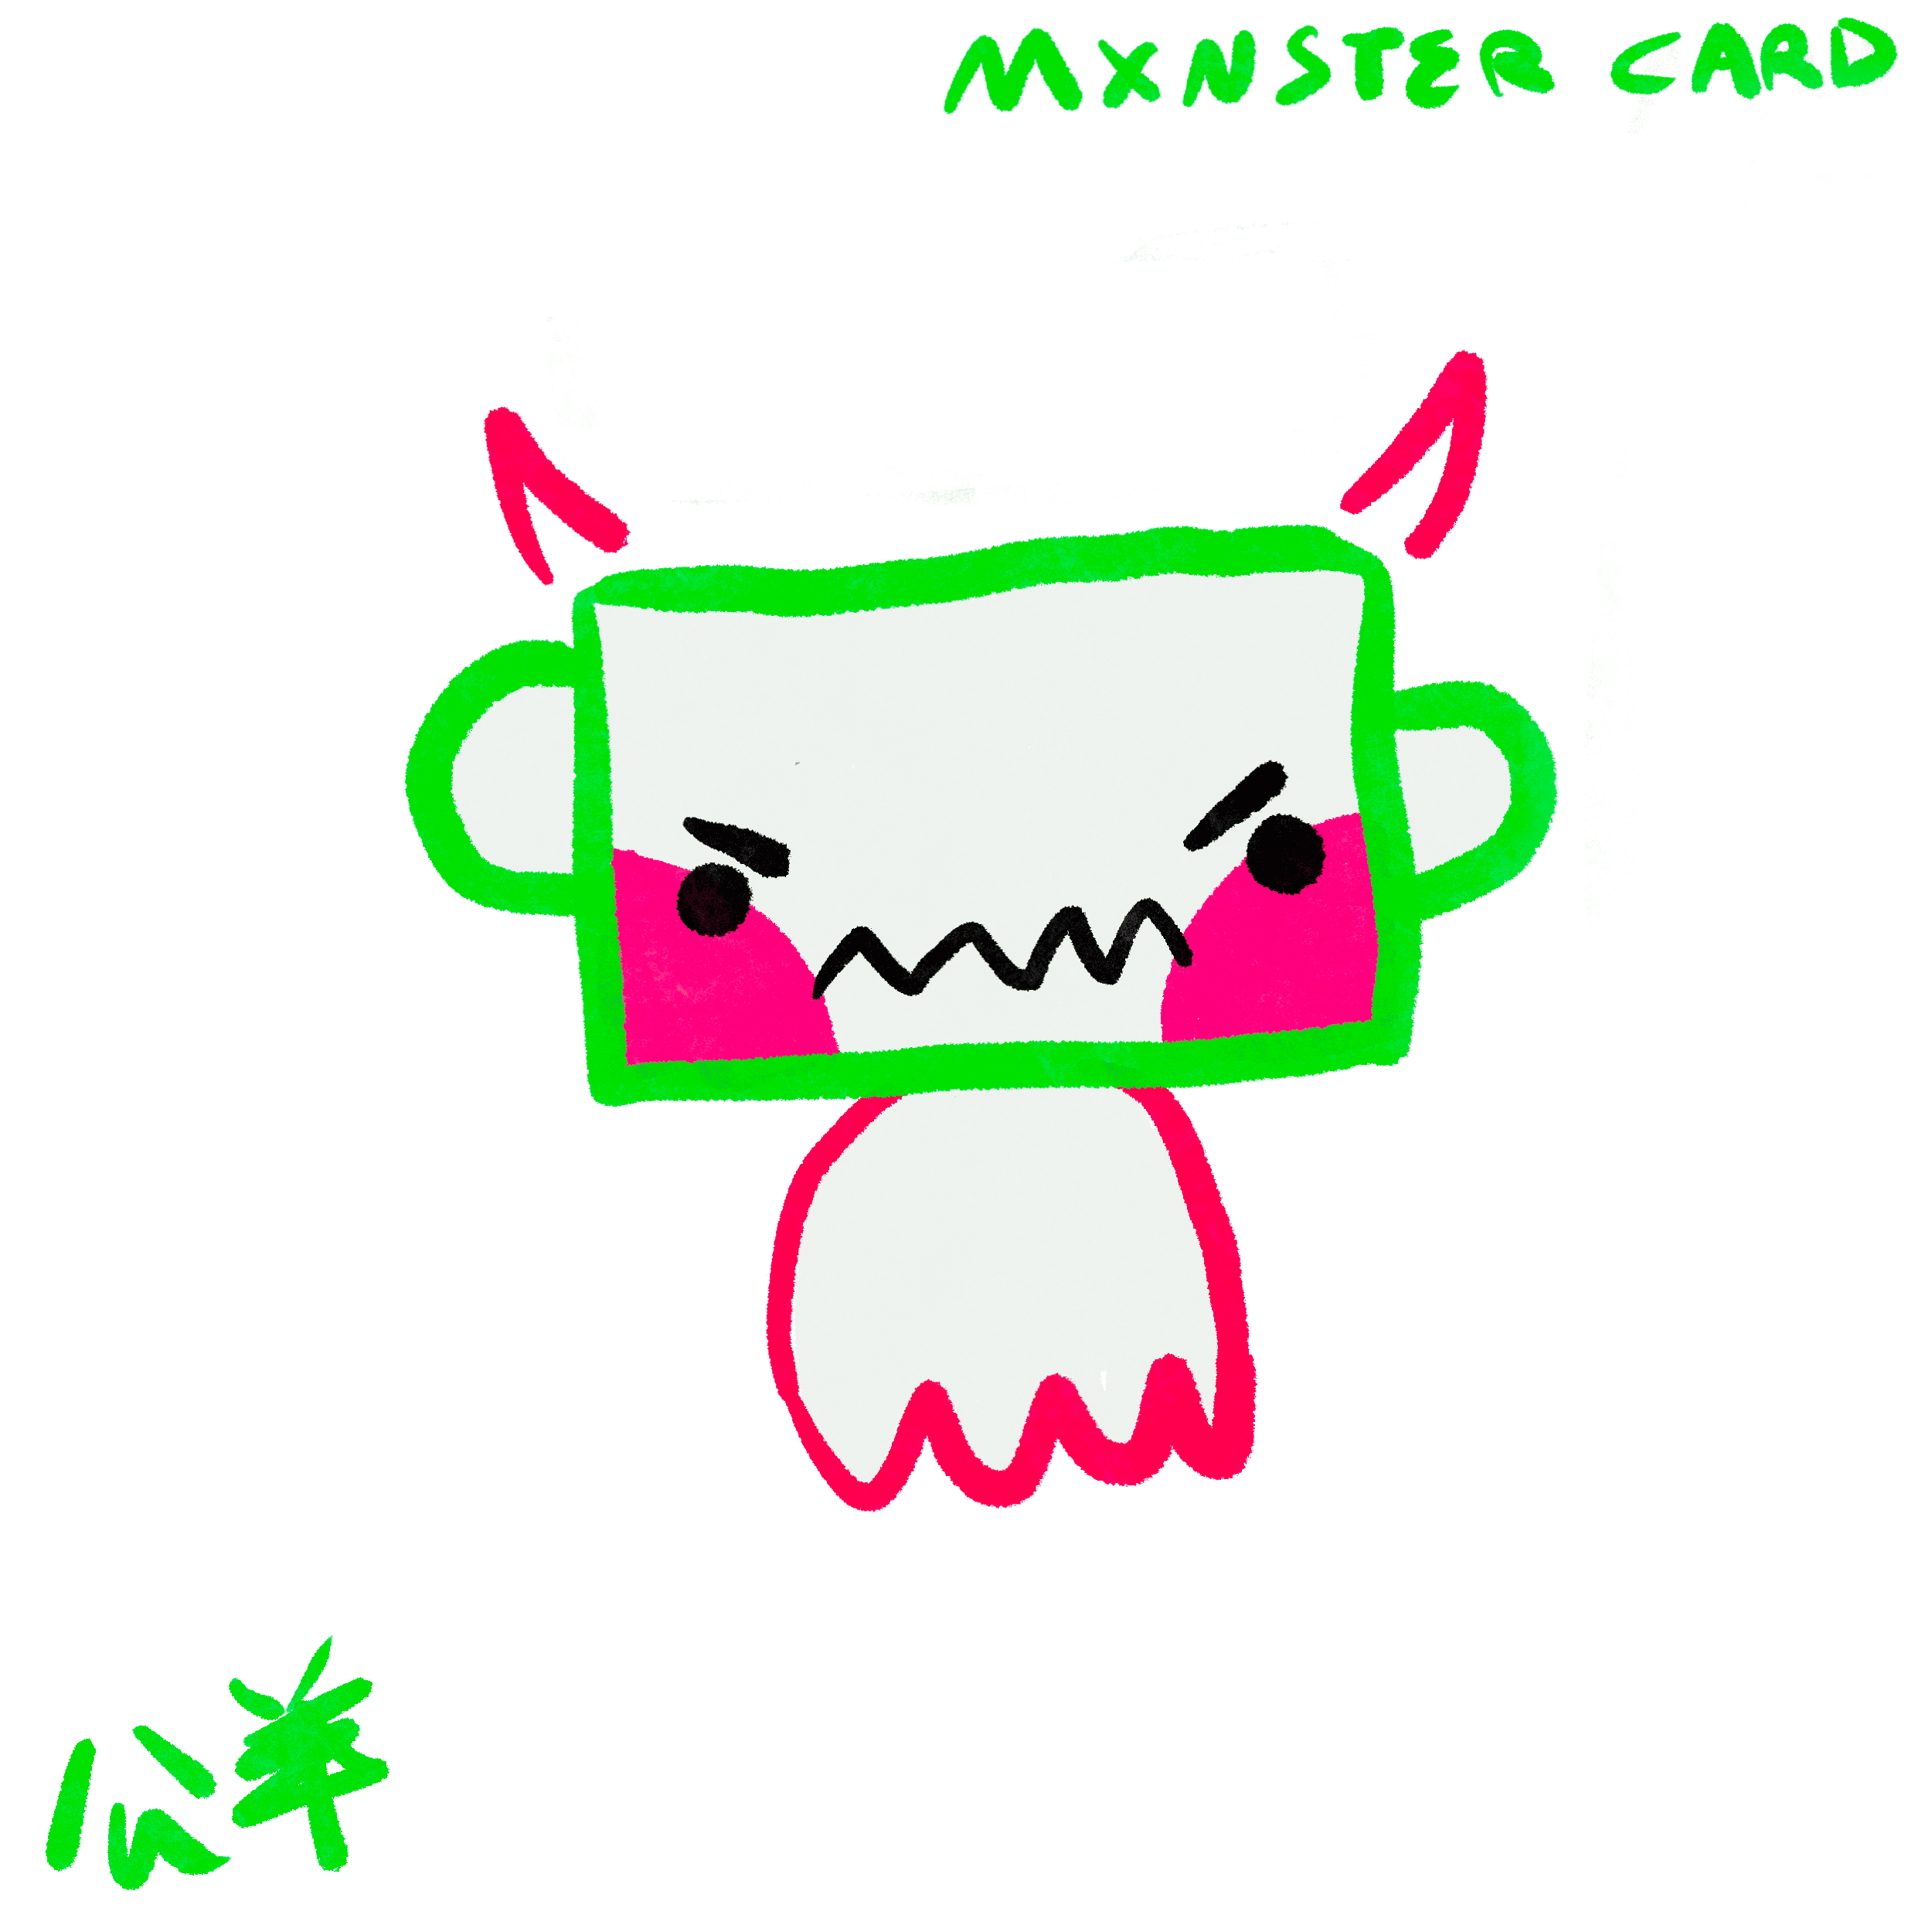 Mxnster Card 01